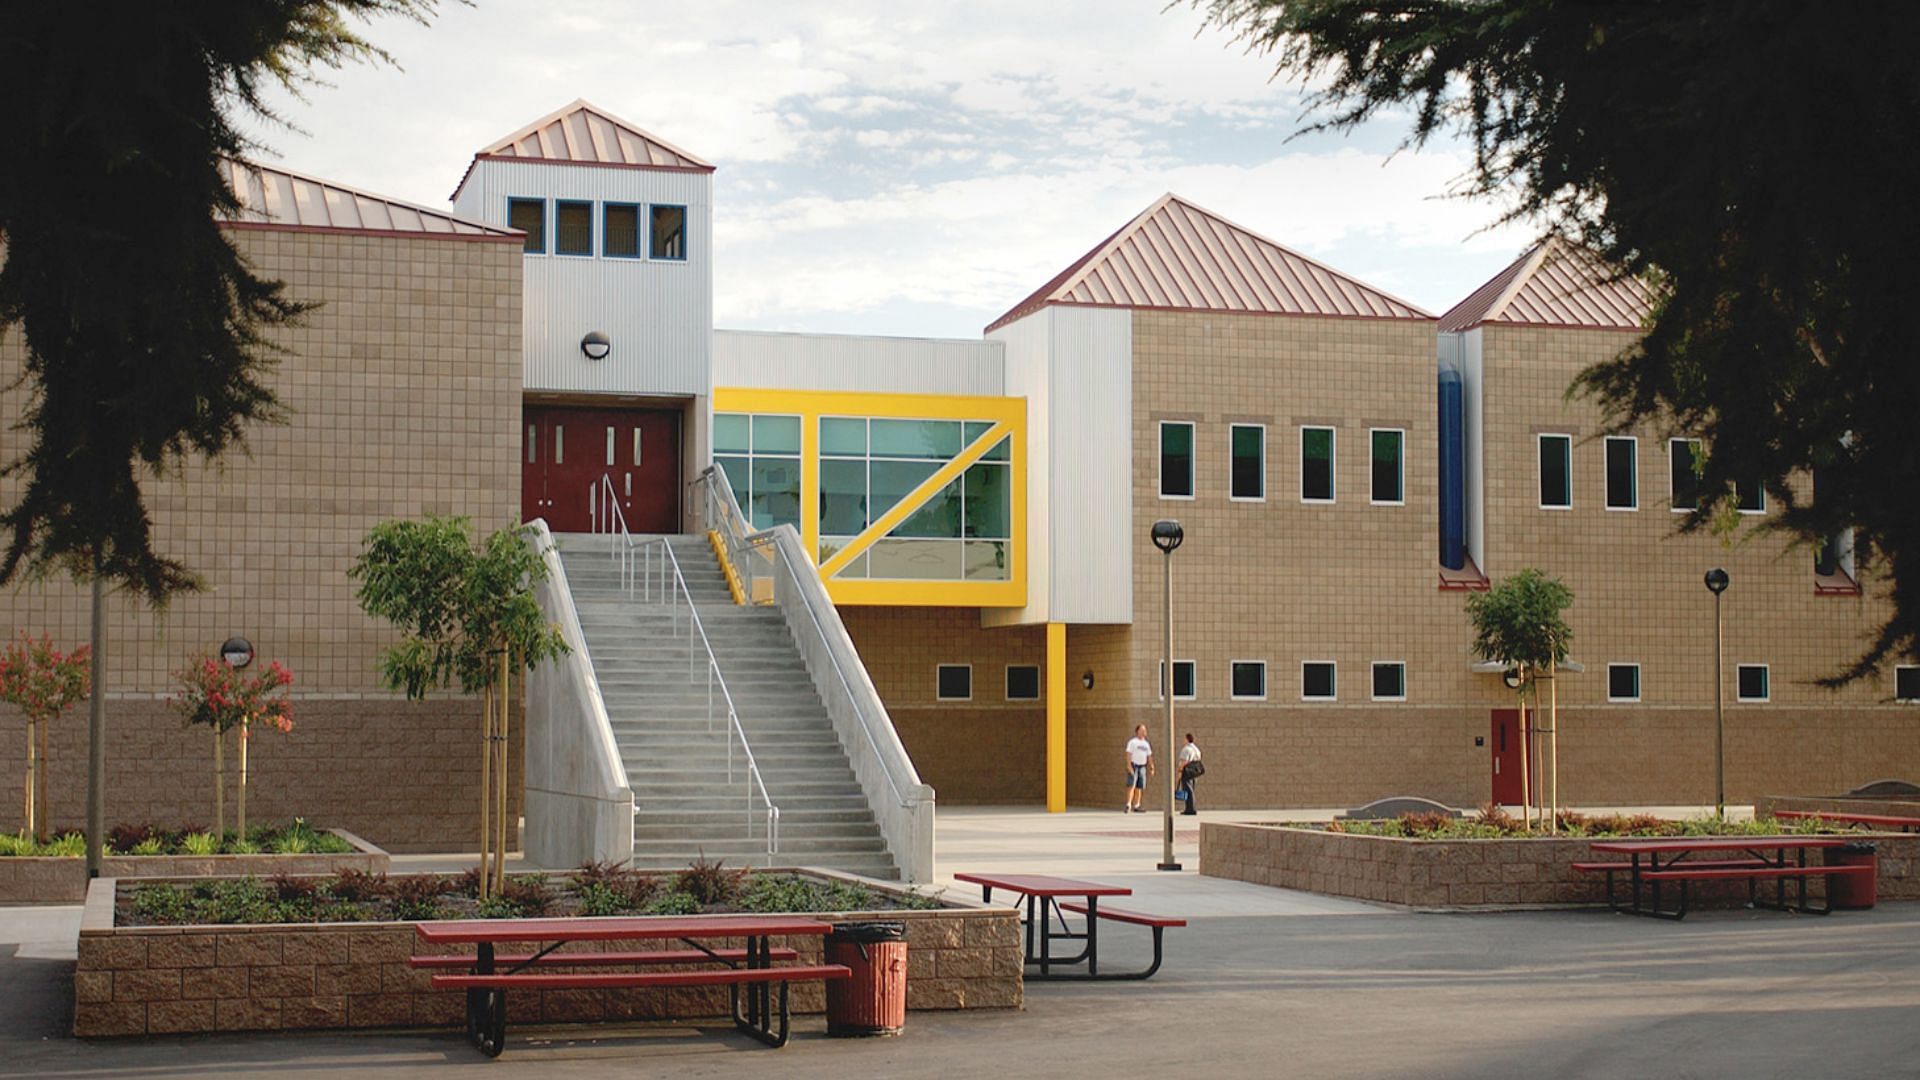 Modesto High School math and science building (image via Getty/mhs.com)